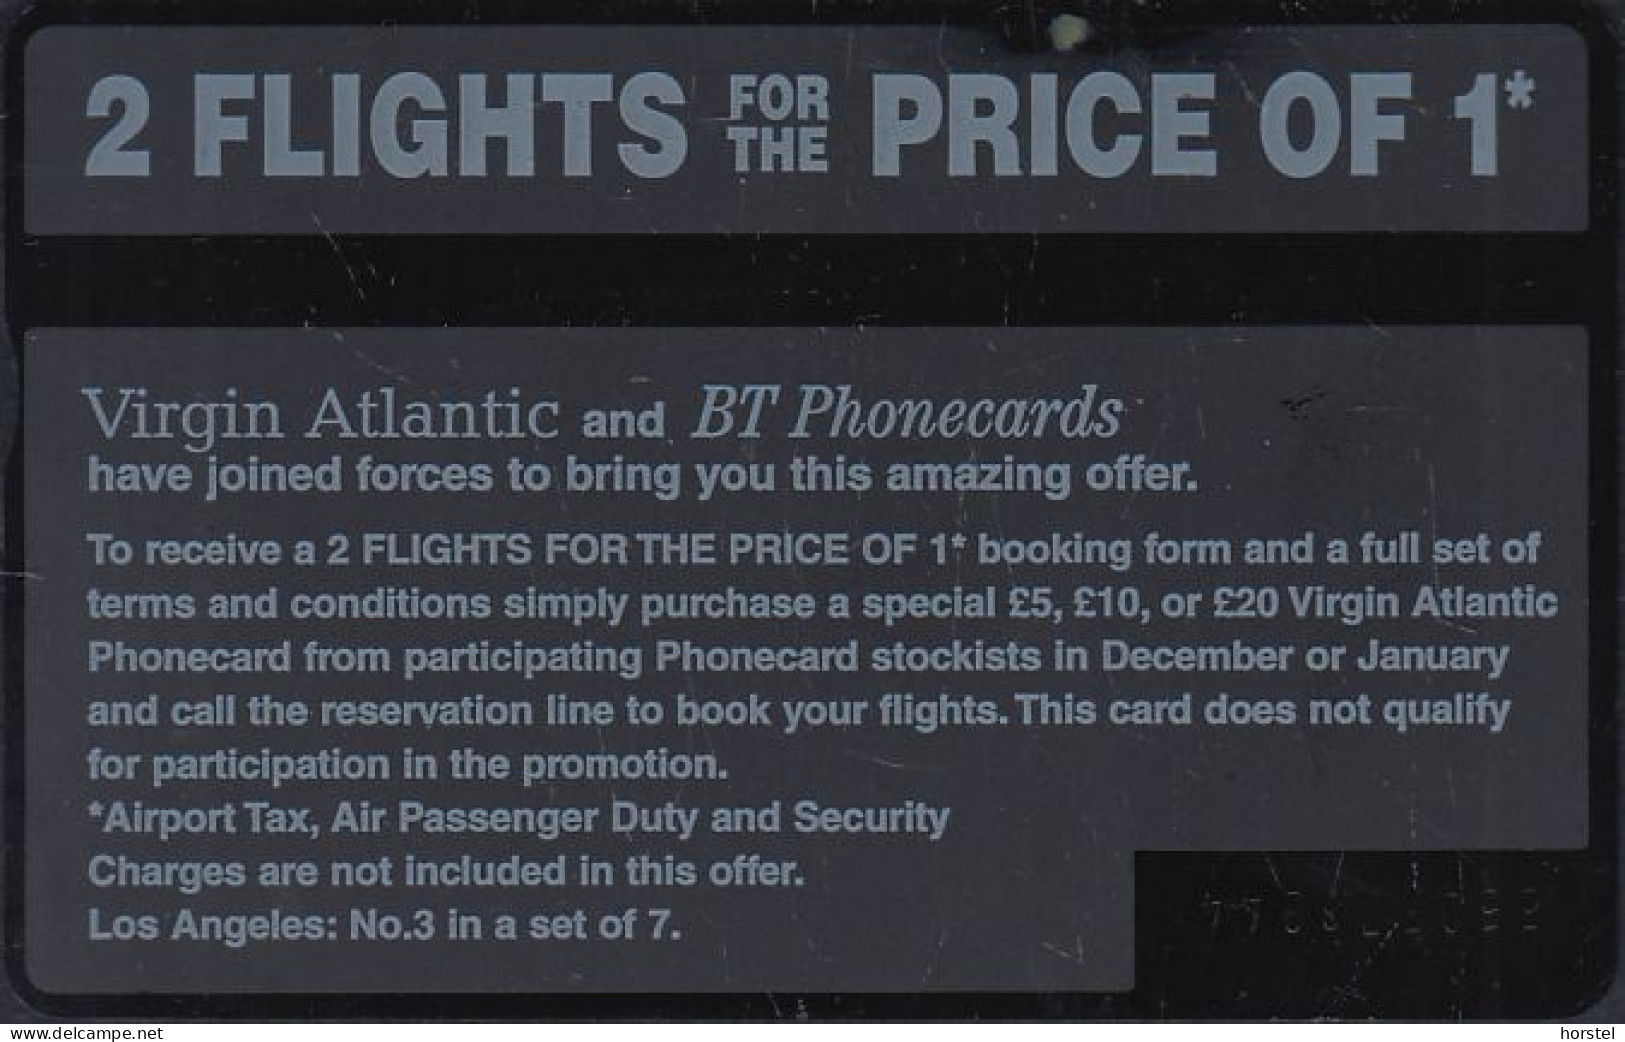 UK Bta 137 Virgin Atlantic (3) Los Angeles - Airplane - Flugzeug - 550F - BT Advertising Issues